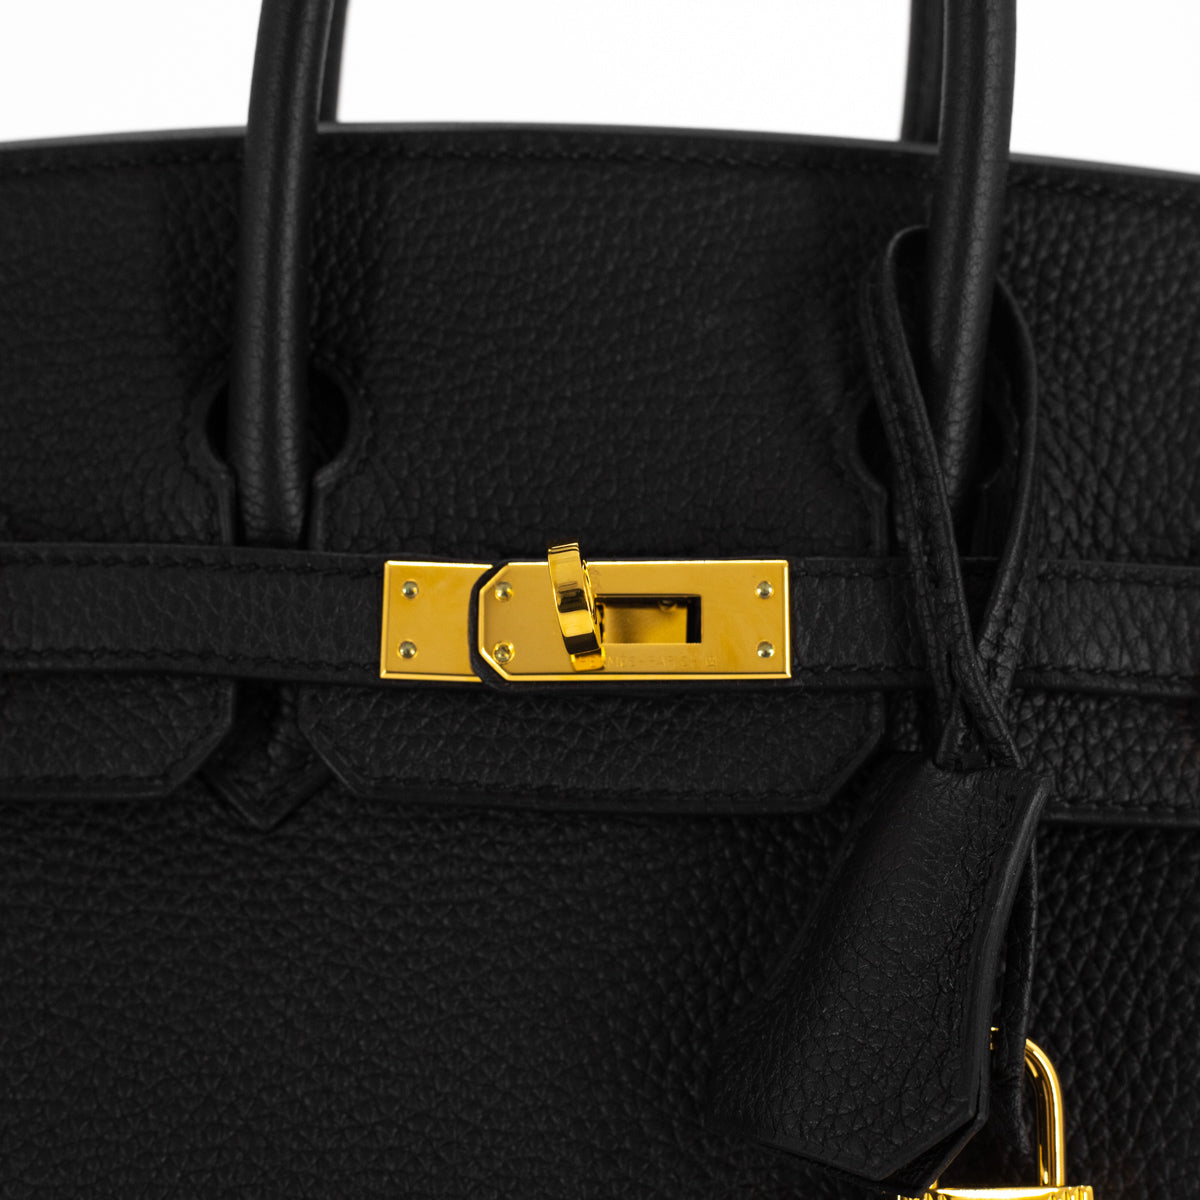 Hermes Birkin 25 tote bag Madame Noir – STYLISHTOP